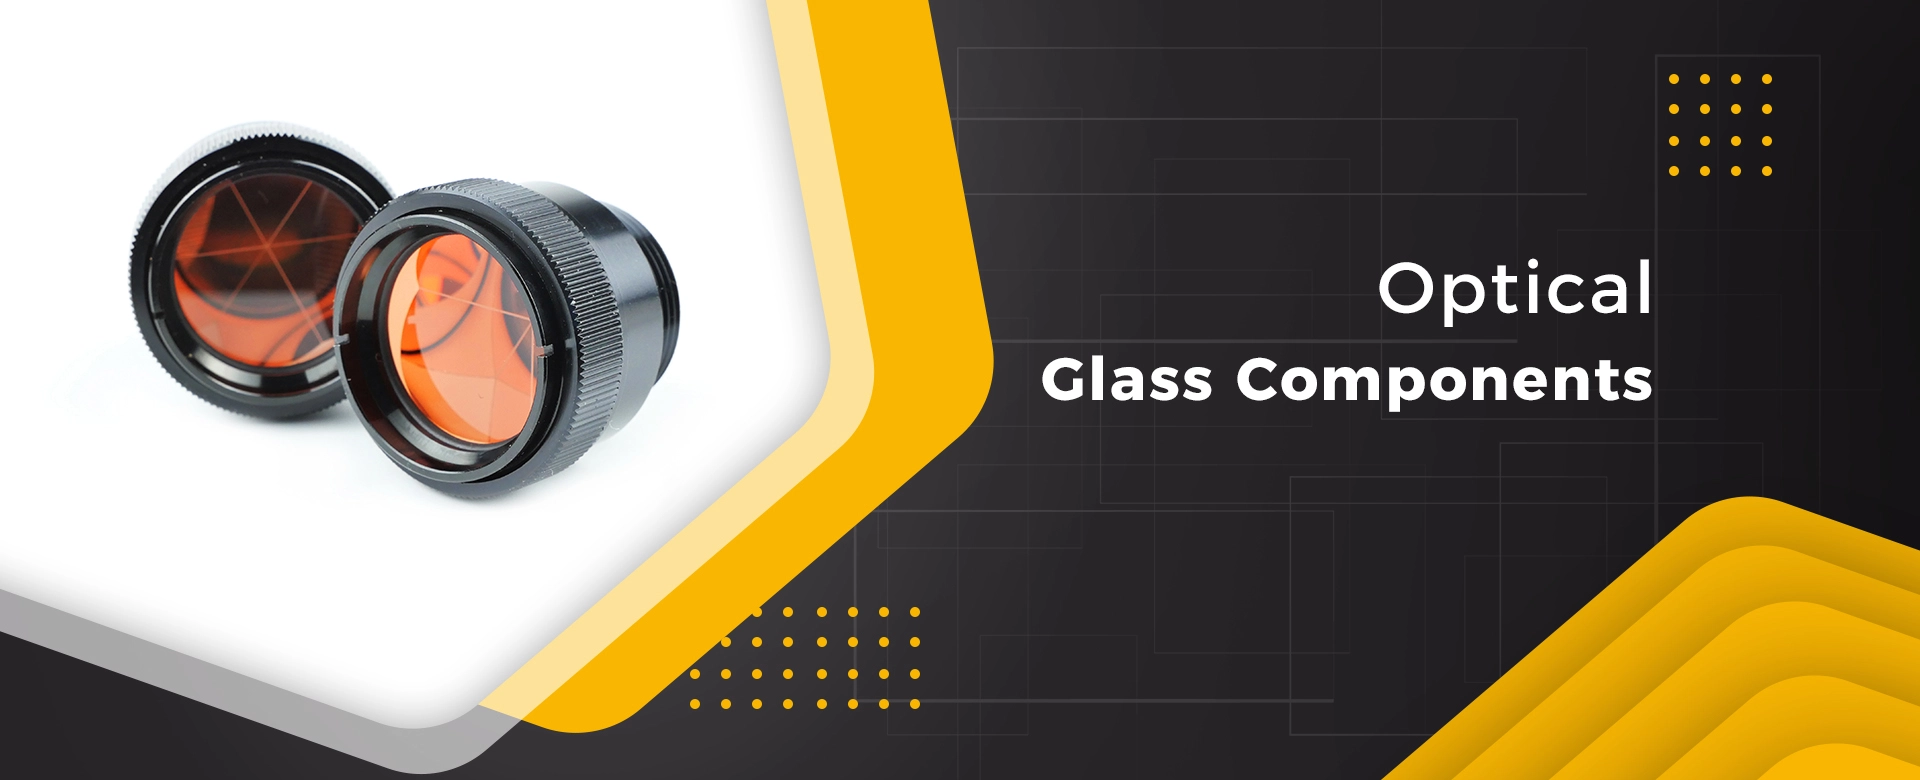 Optical Glass Components